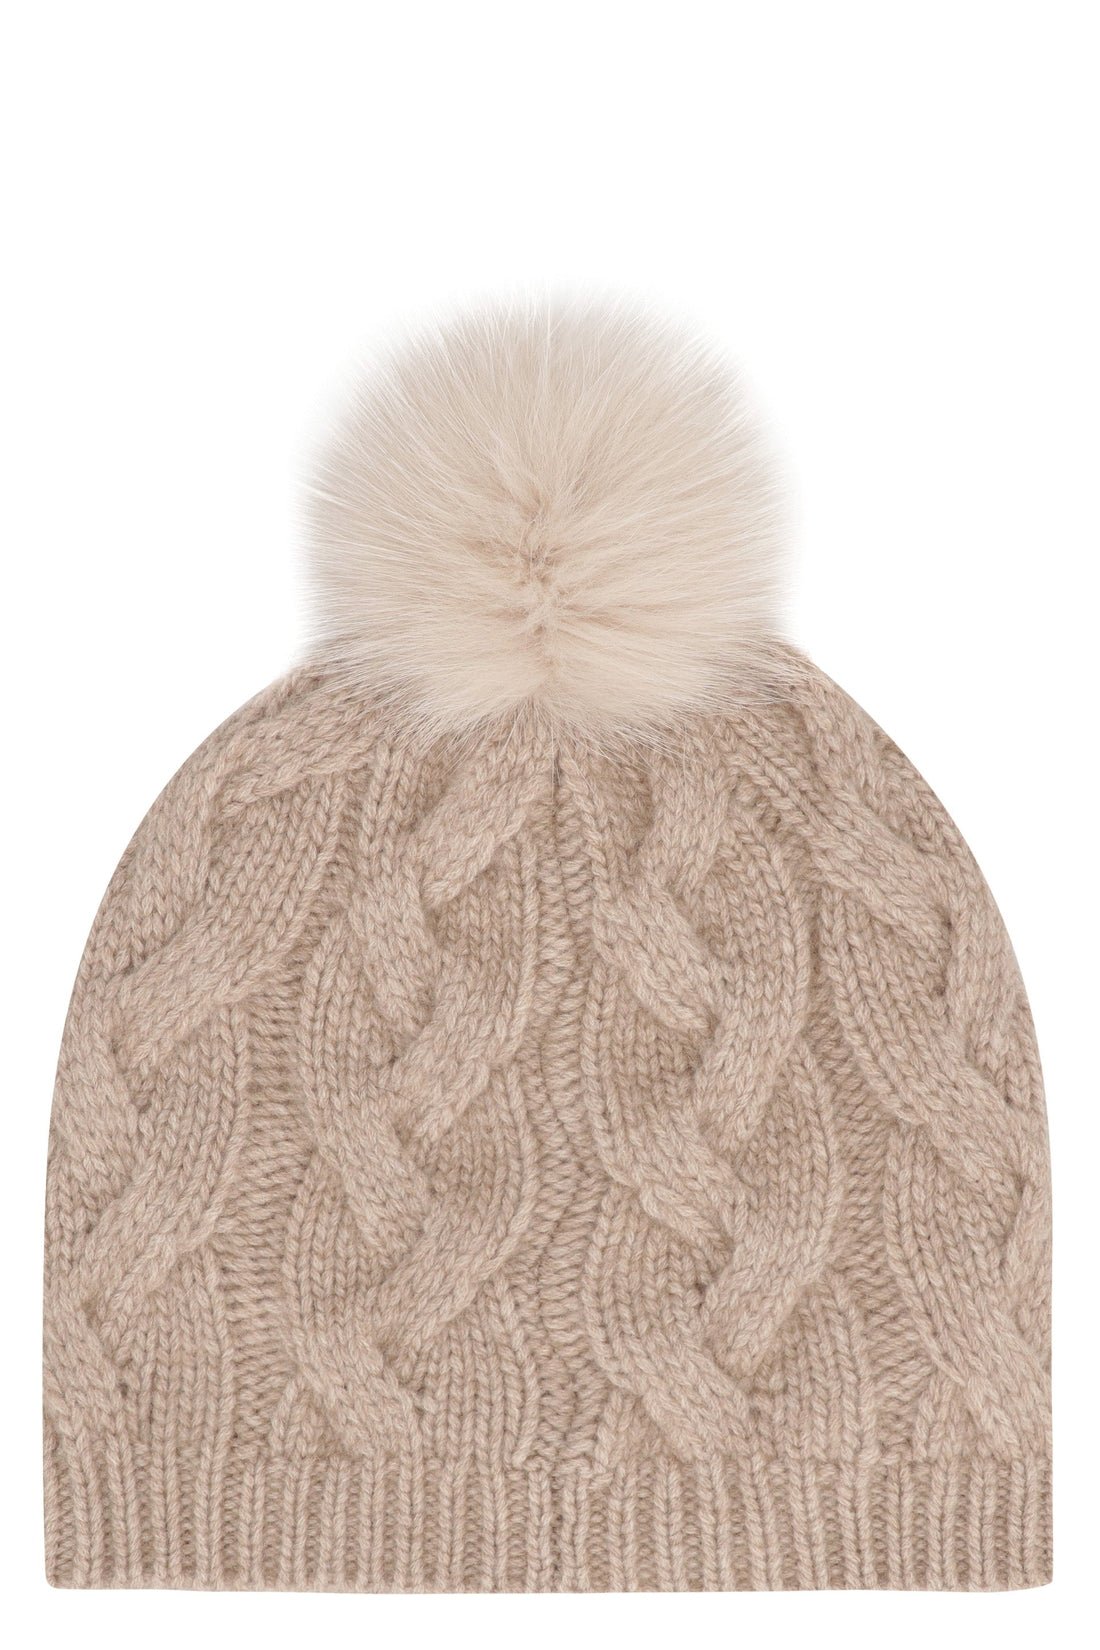 Max Mara-OUTLET-SALE-Acqua knitted beanie-ARCHIVIST